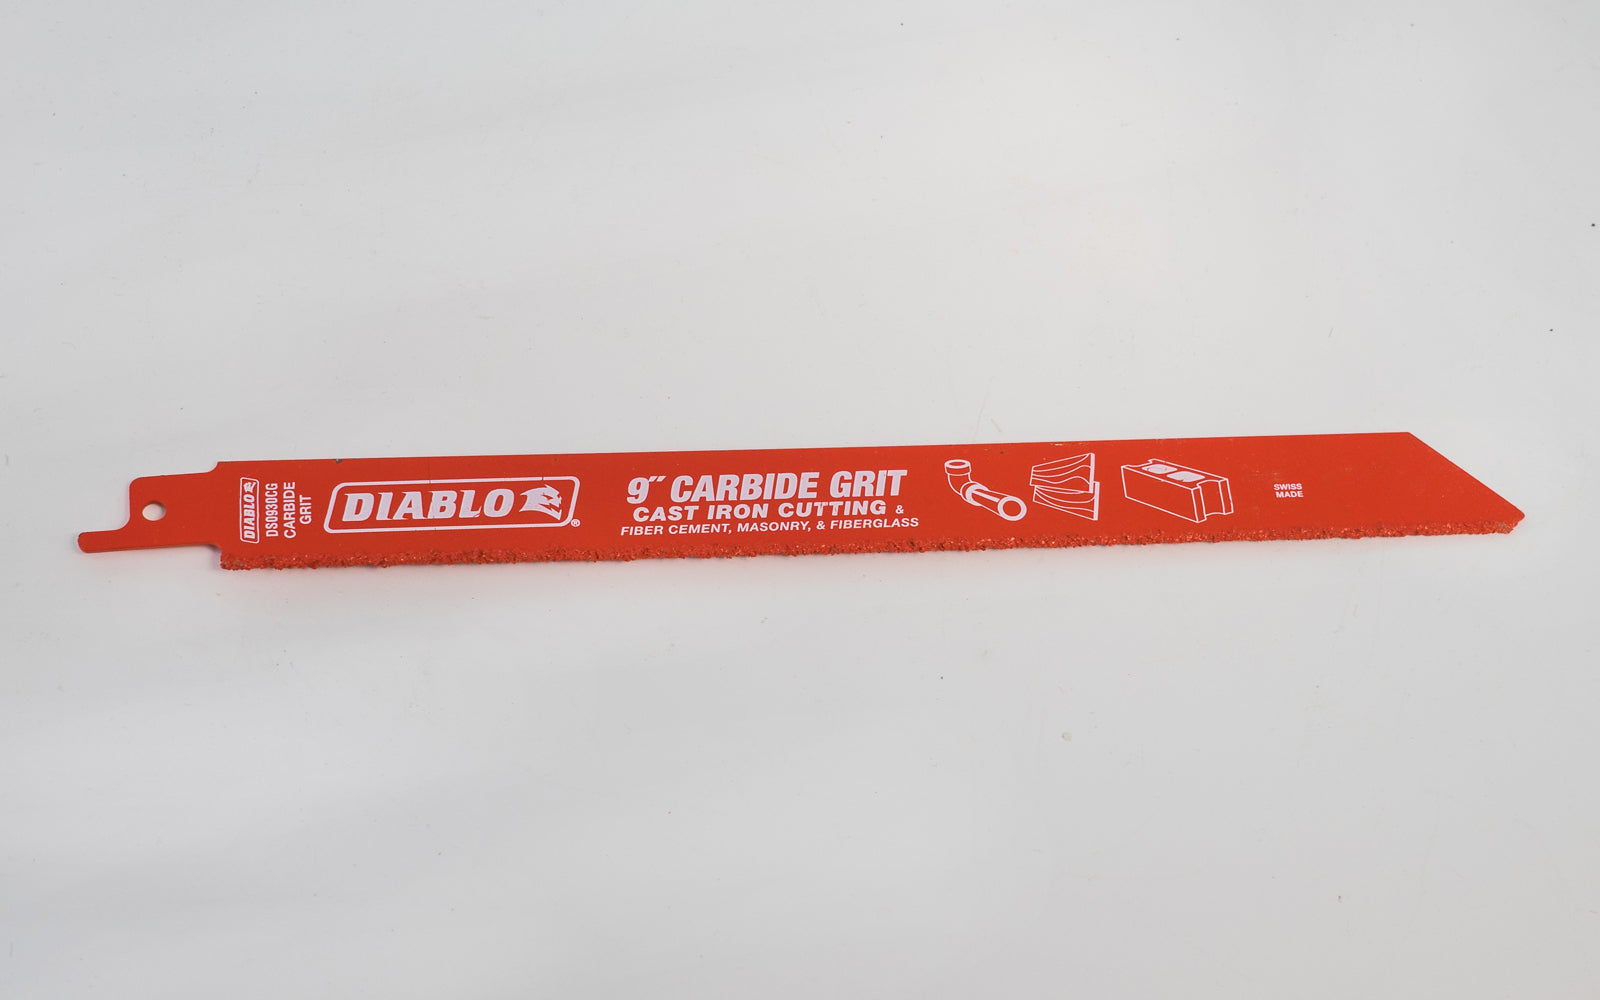 Diablo 9" Carbide Grit Reciprocating Saw Blade. Model DS0930CG. Swiss made.